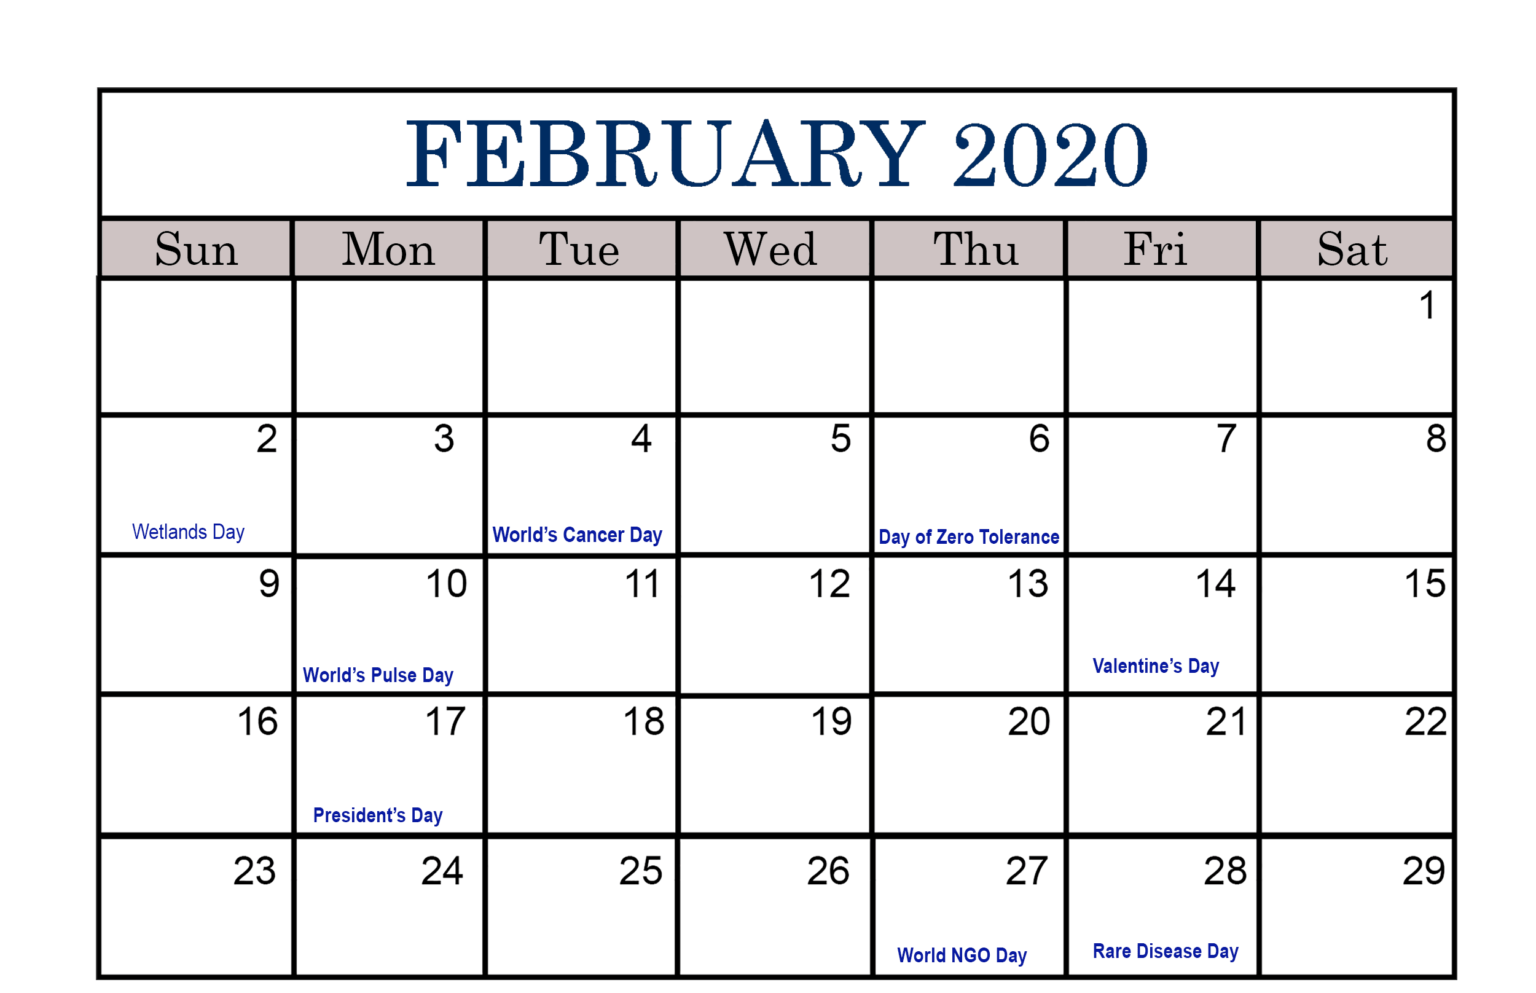 February 2020 Calendar Excel Sheet For Office | Free Printable Calendar